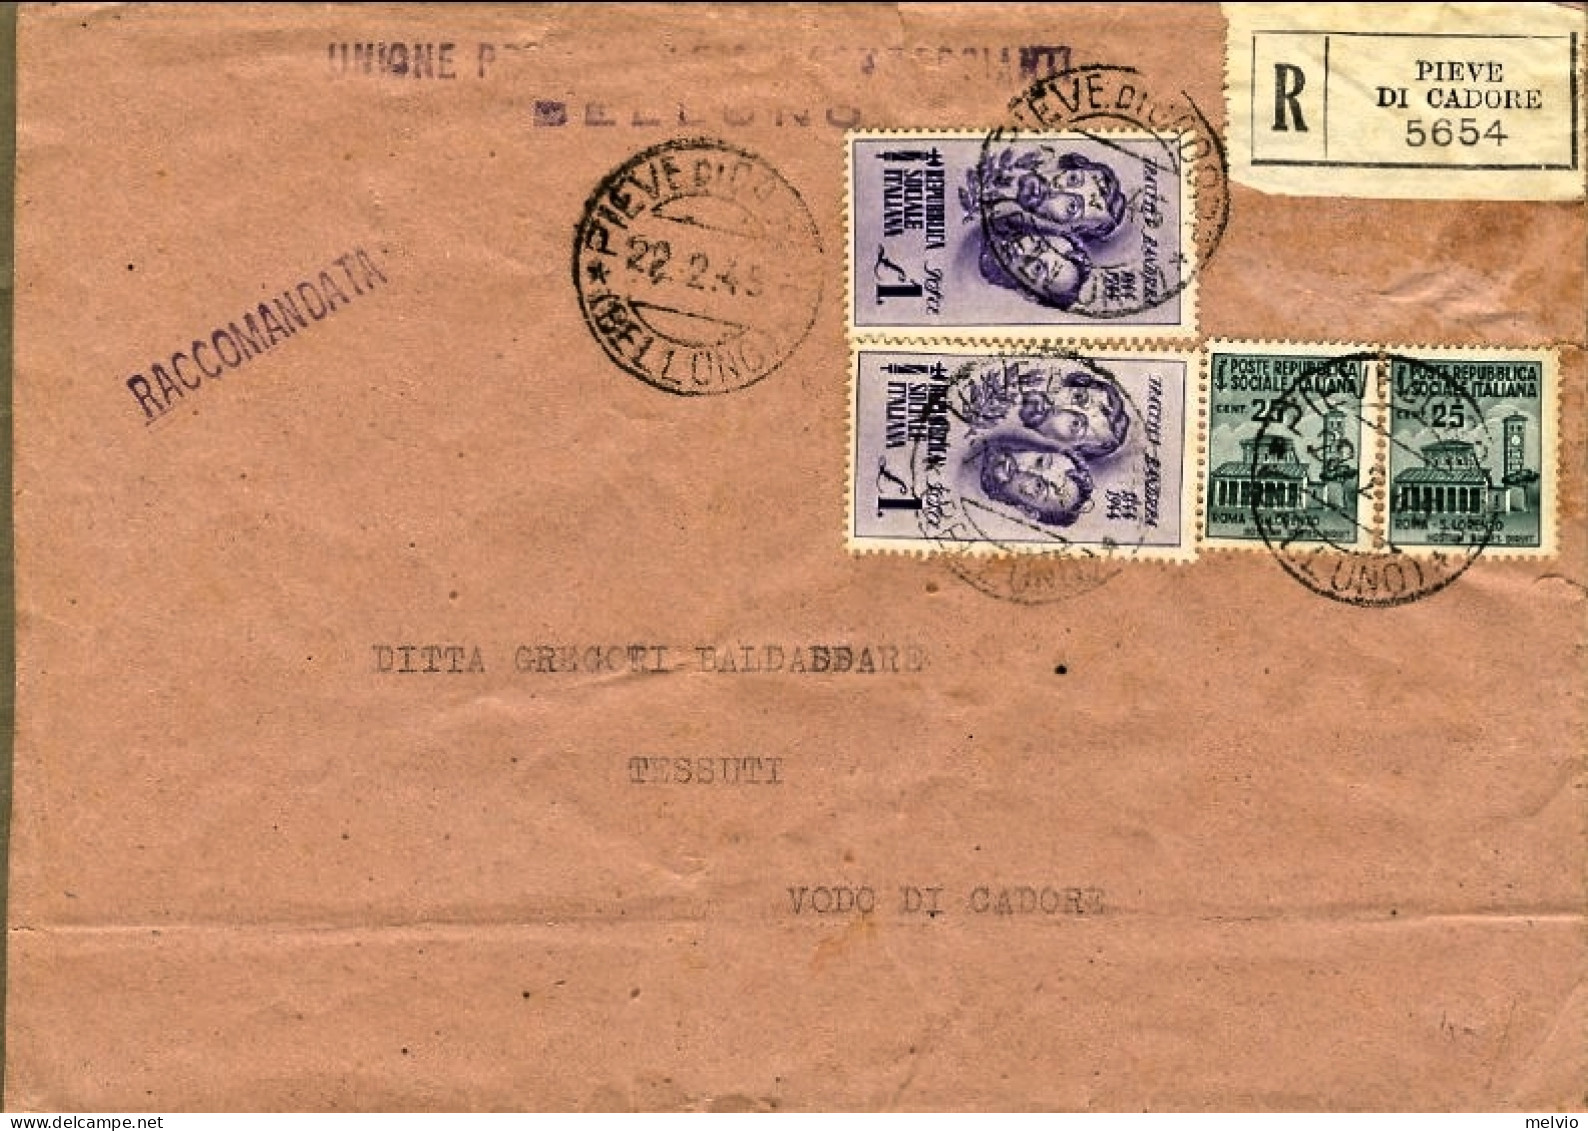 1945-busta Raccomandata Affr. Due 25c. Monumenti Distrutti+due L.1 F.lli Bandier - Poststempel